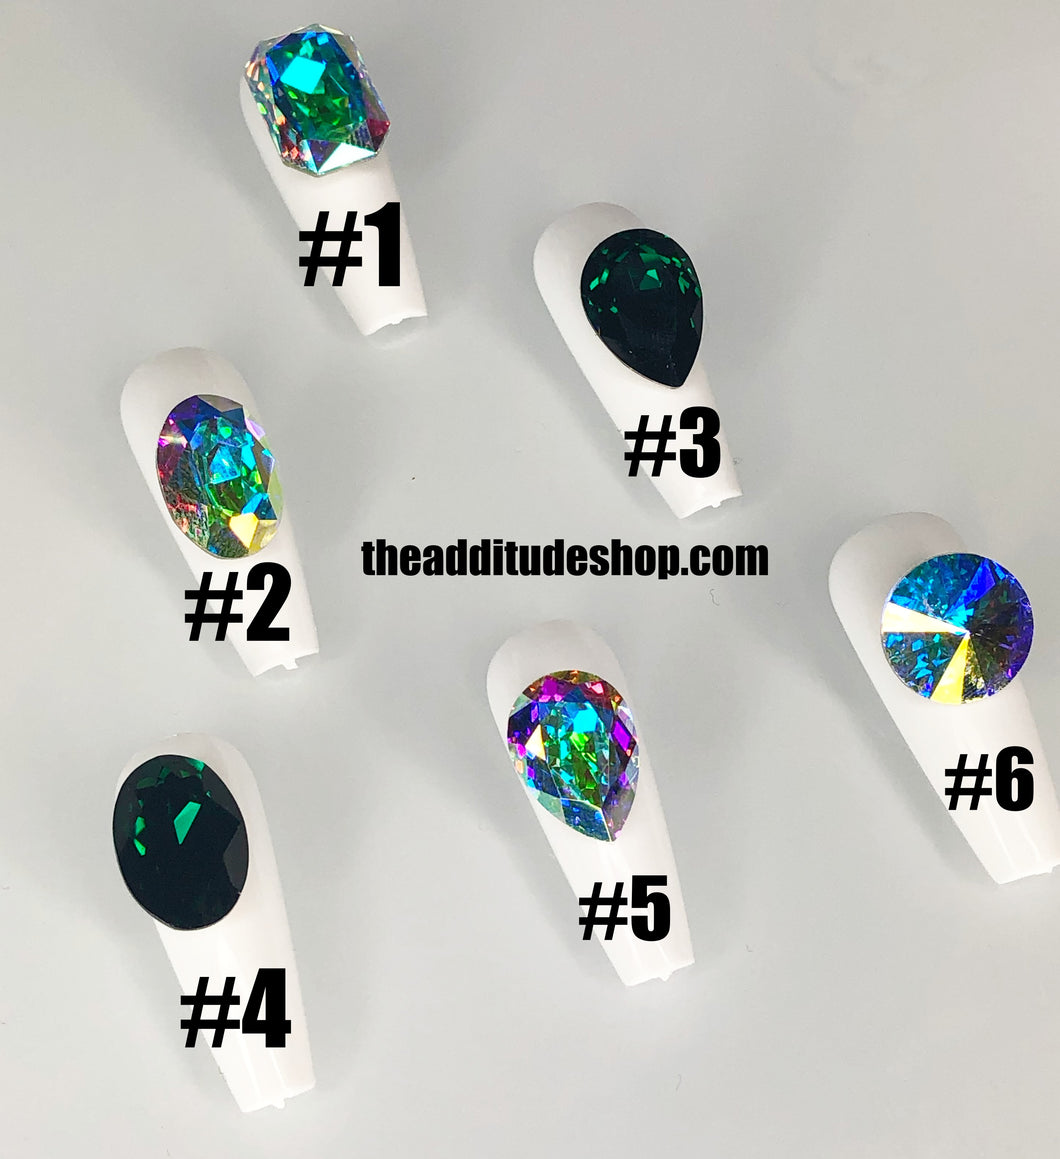 Oversized Pointy Back K9 Glass Big Gems Rhinestones Crystals-5 Pieces